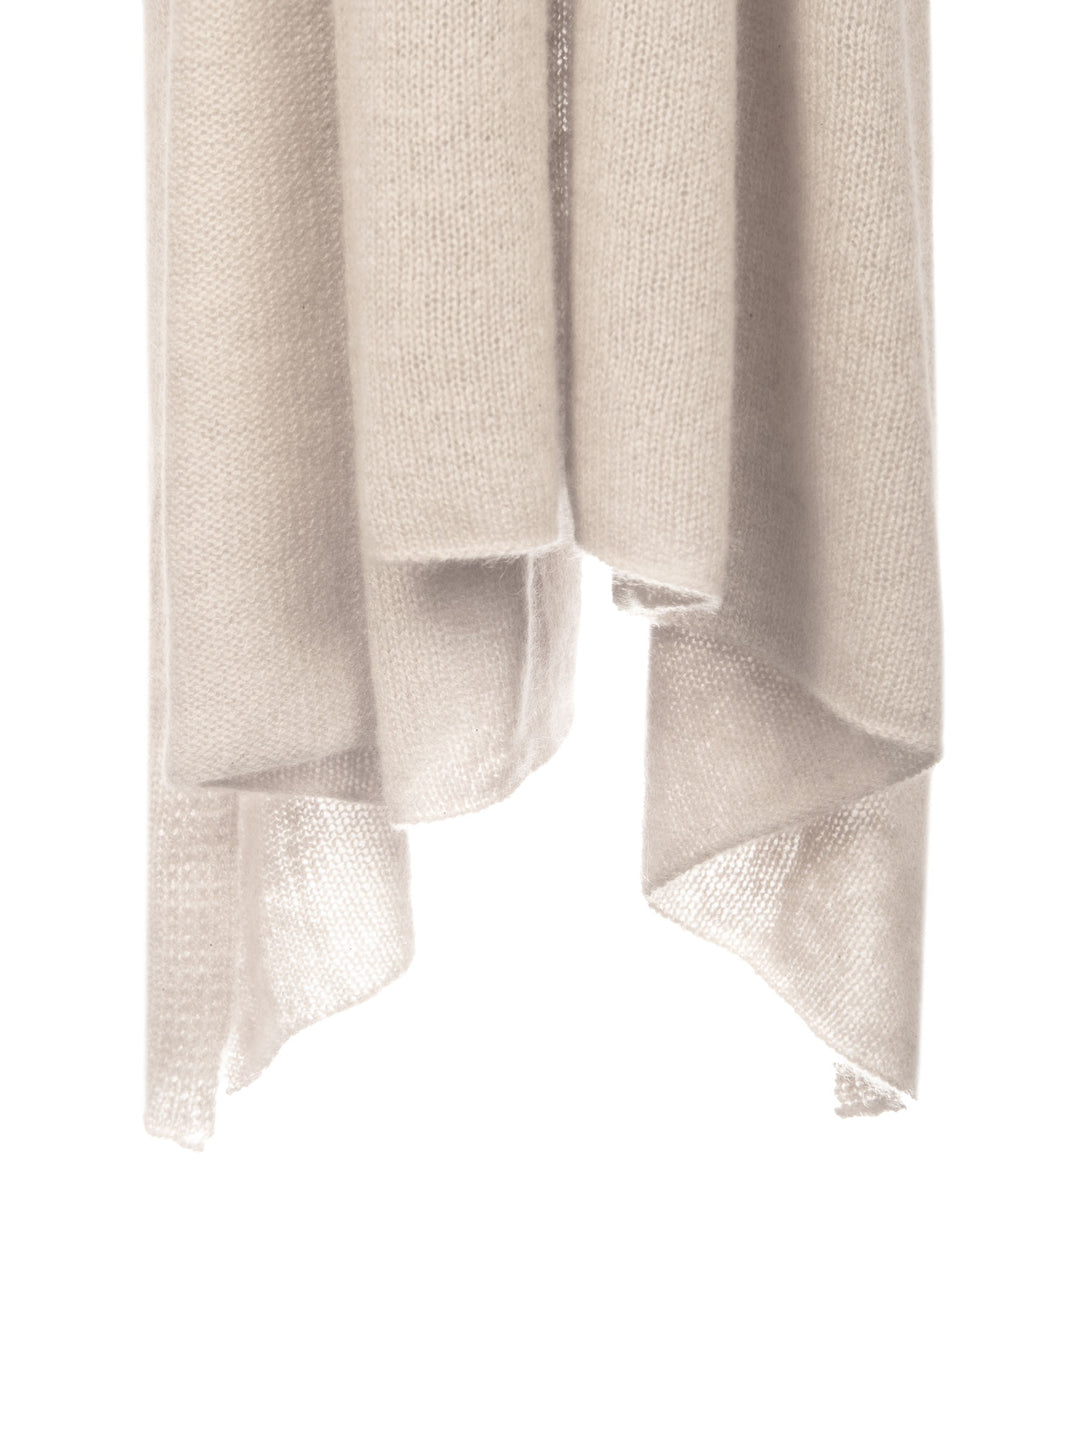 Cashmere scarf "Flow" 100% cashmere from Kashmina. Norwegian design. Color Jute